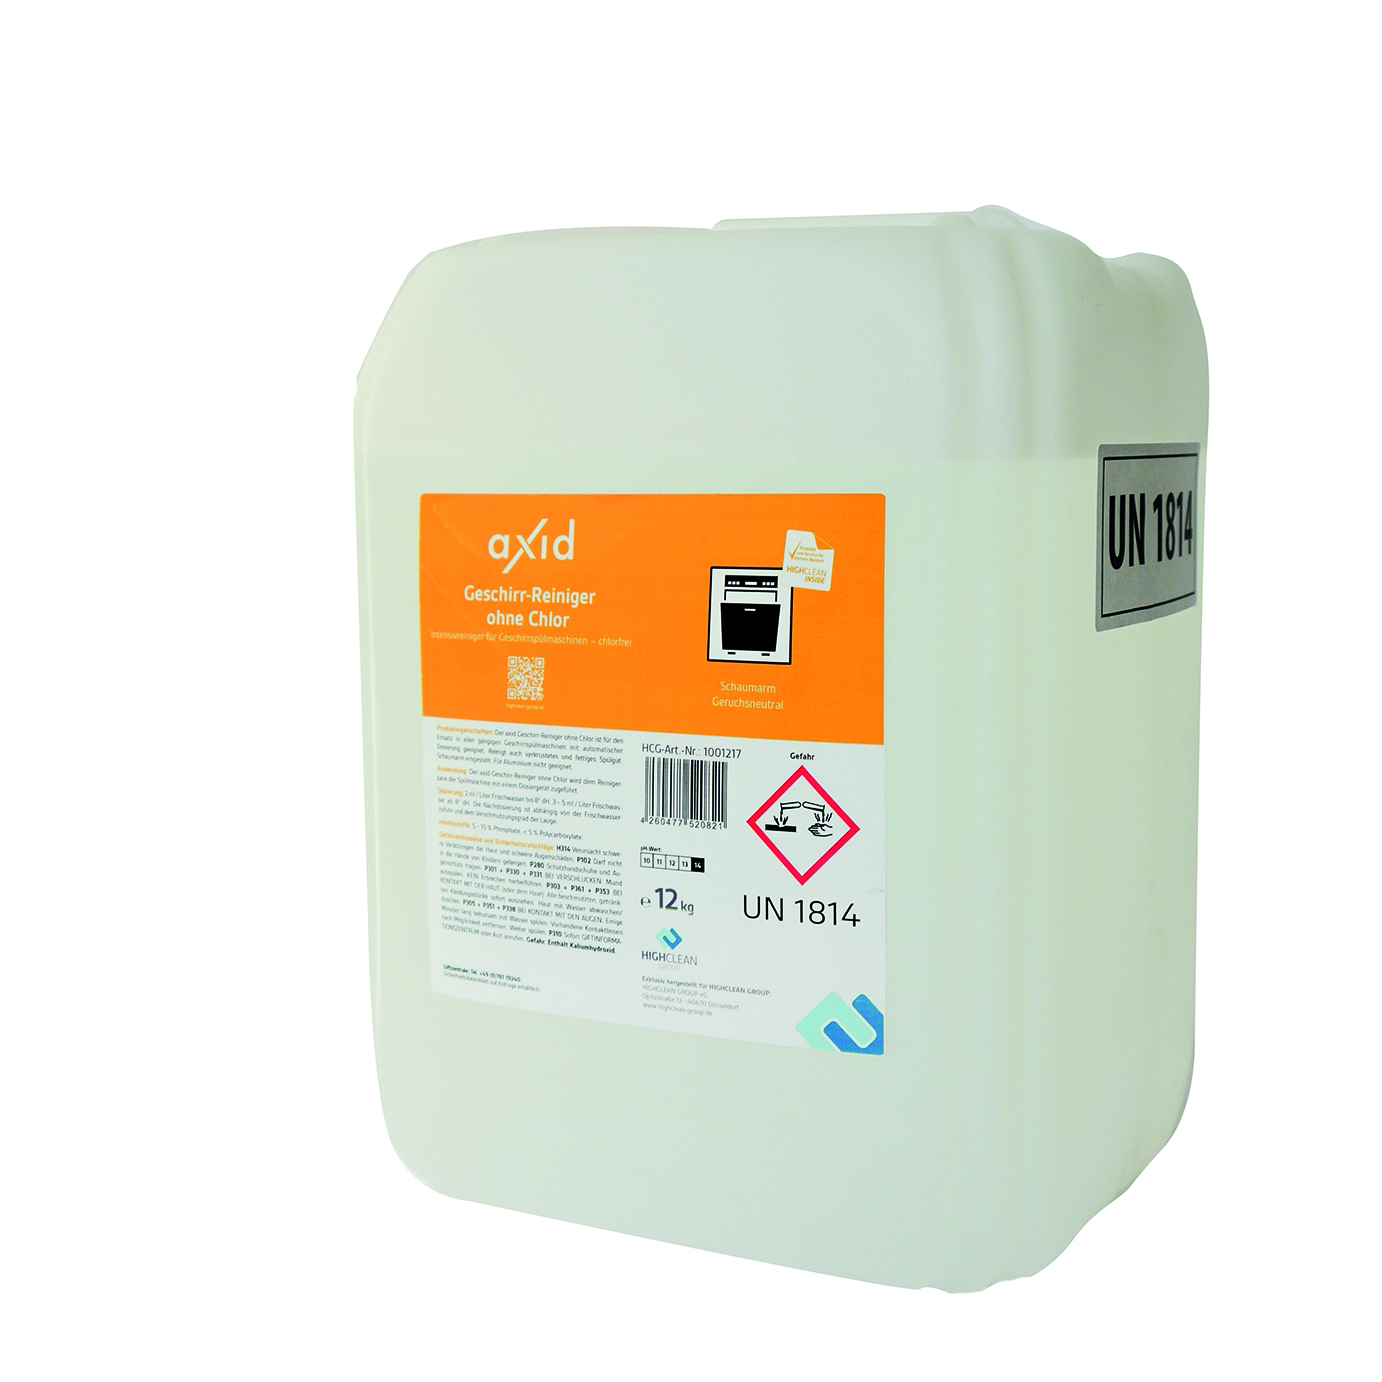 Axid Geschirrspülmaschinen- Geschirrreiniger ohne Chlor 10 Liter